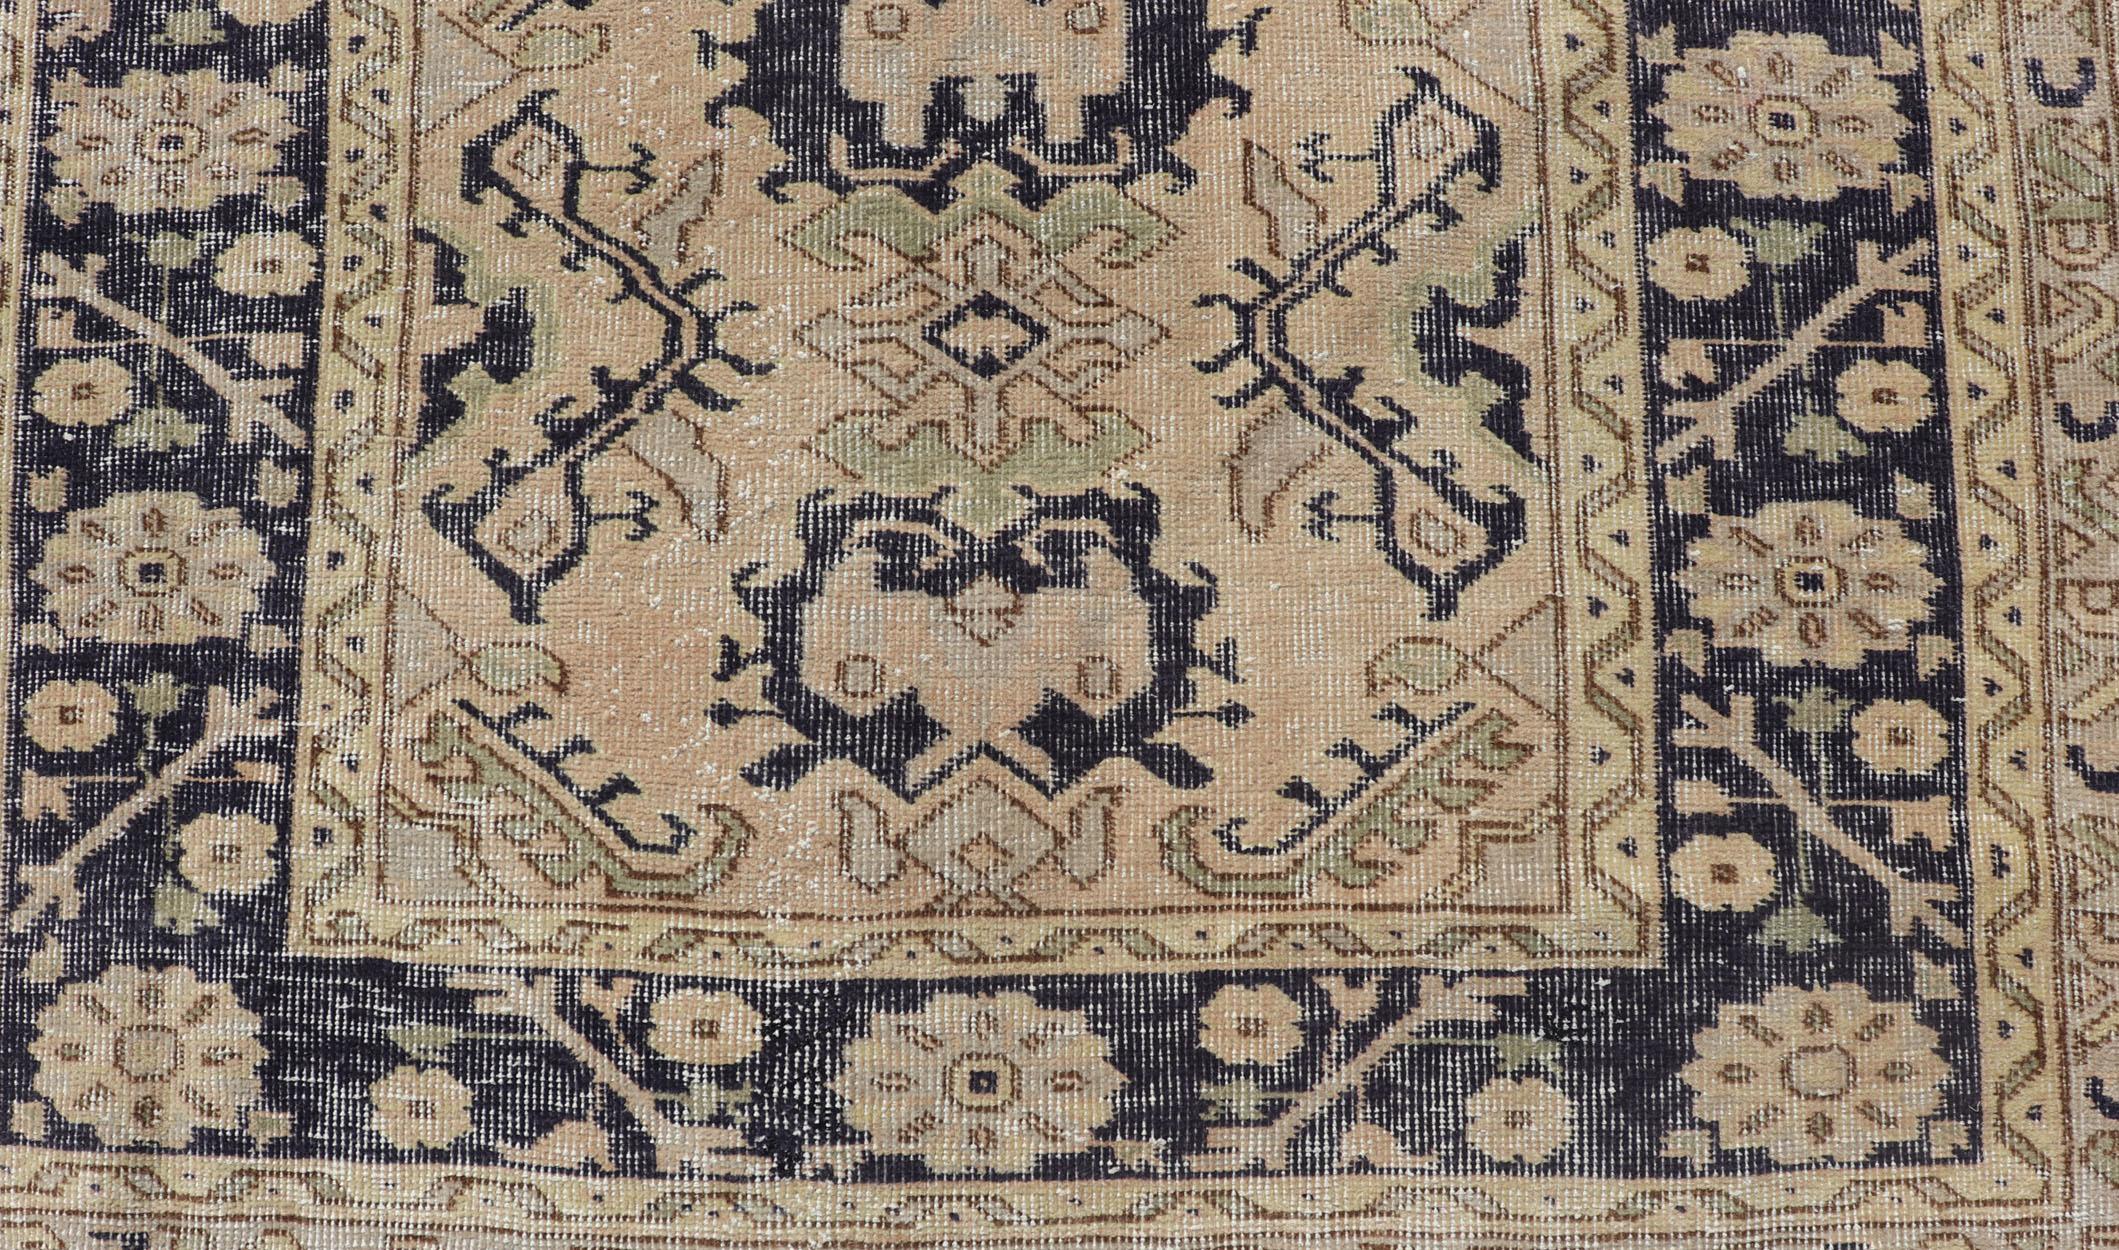 Vintage Turkish oushak rug with all-over Sub-Geometric Medallion design in blue. Keivan Woven Arts / rug EN-P13368, country of origin / type: Turkey / Oushak, circa Mid-20th Century.

This vintage Oushak features classic Oushak medallion design.